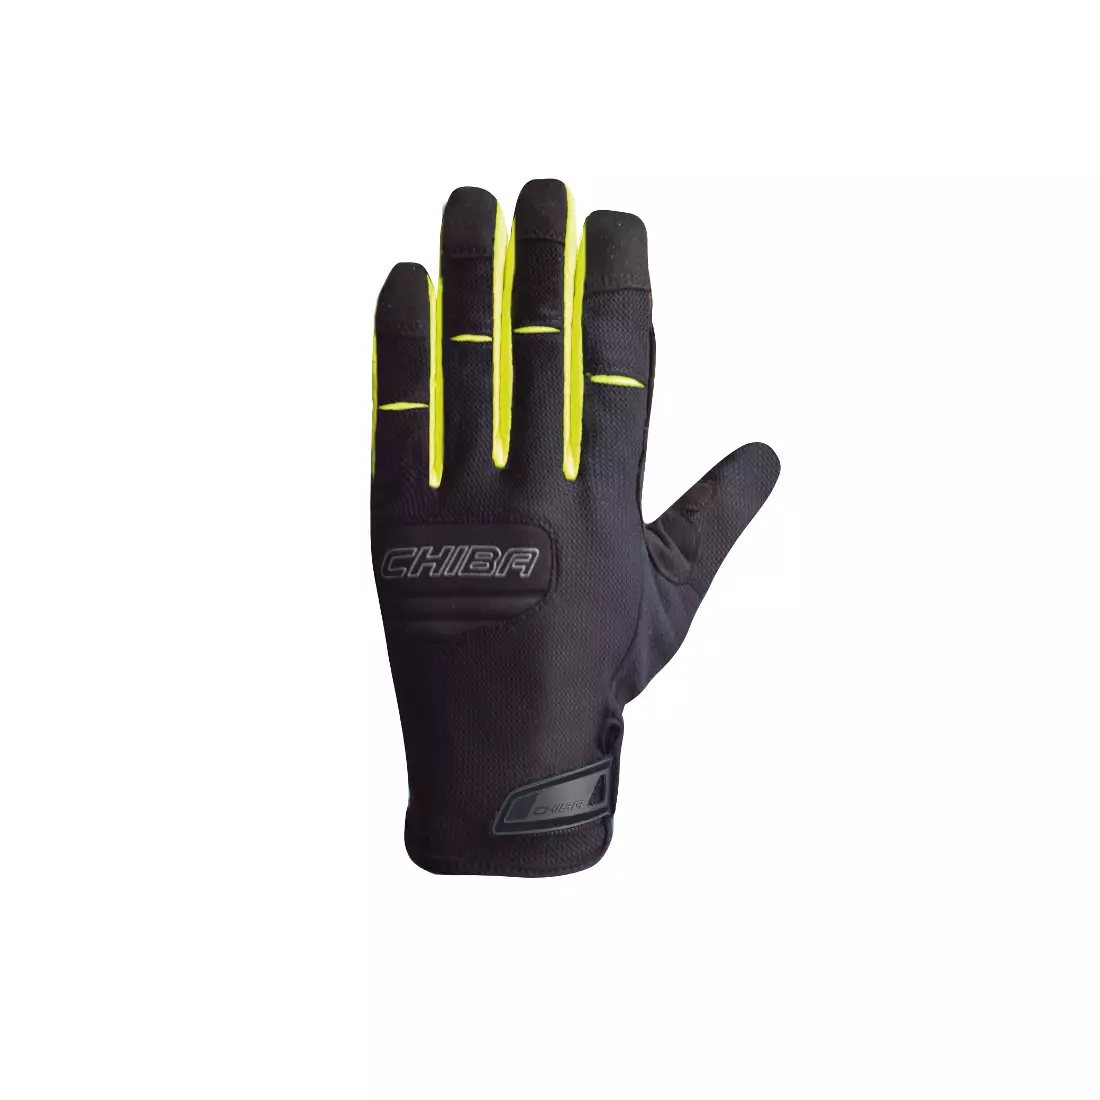 CHIBA TITAN summer long finger cycling gloves, black fluor yellow 30786